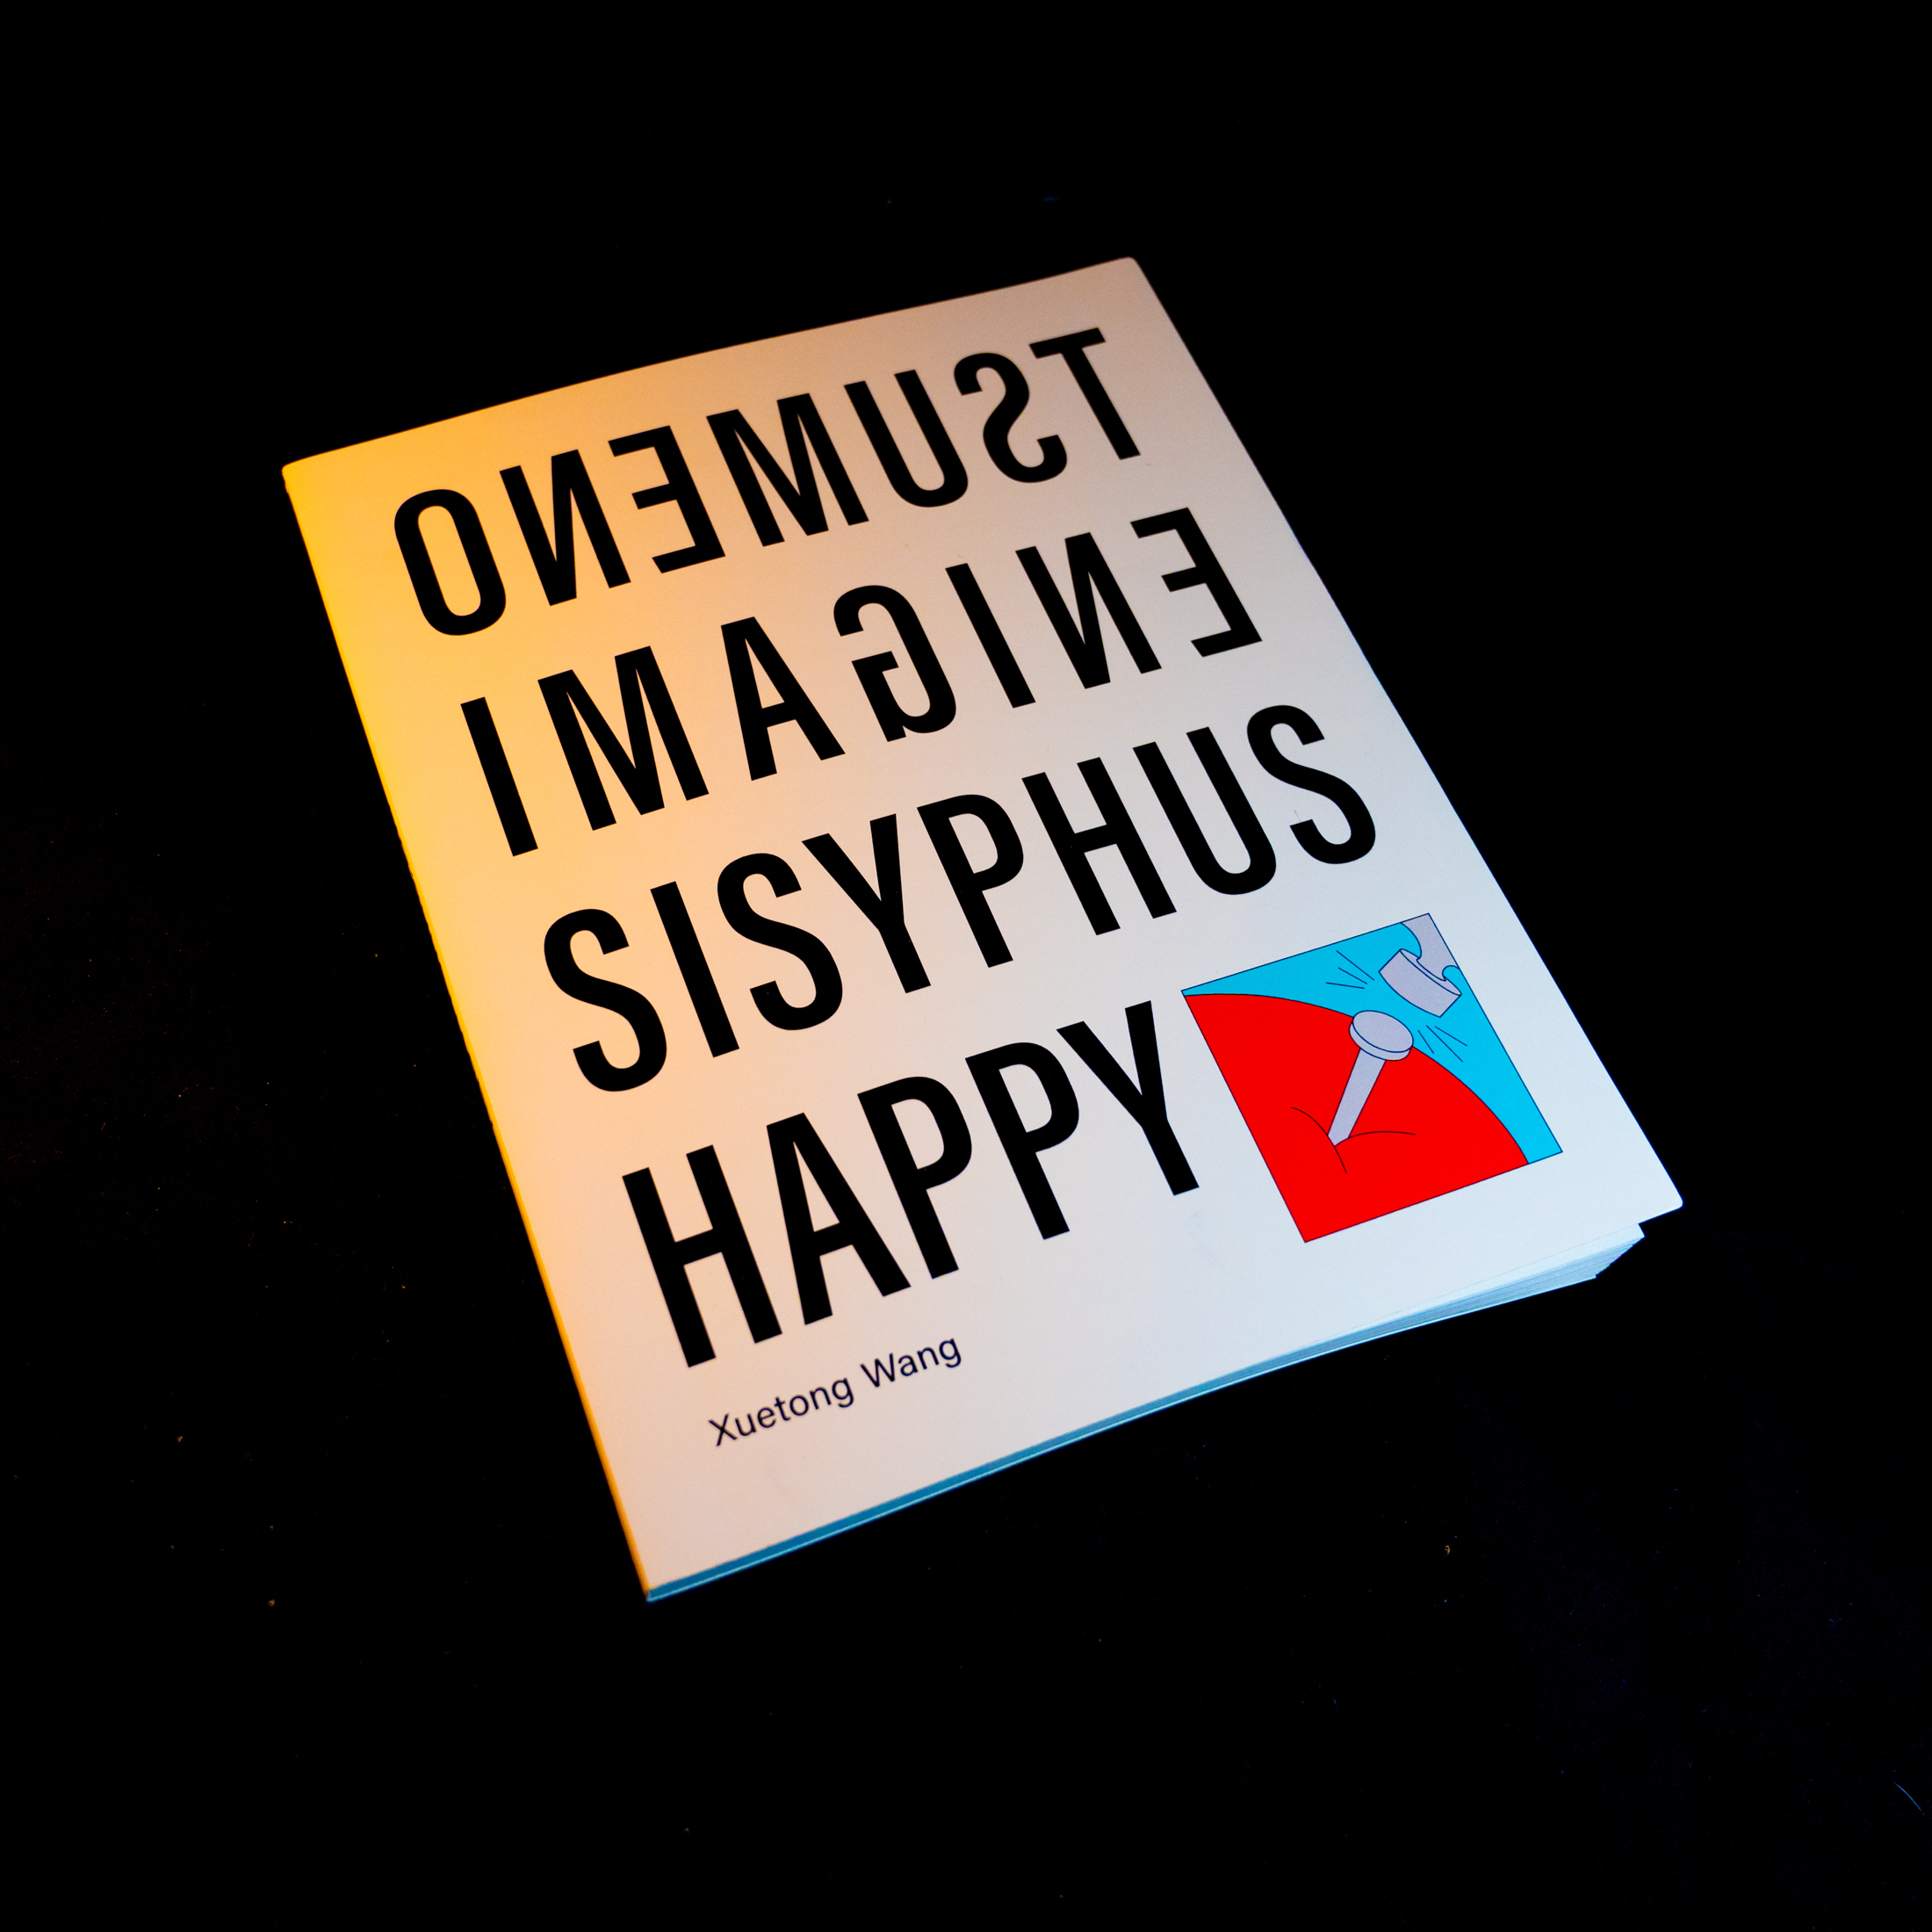 Sisyphus Happy 孔板印刷驻地艺术项目